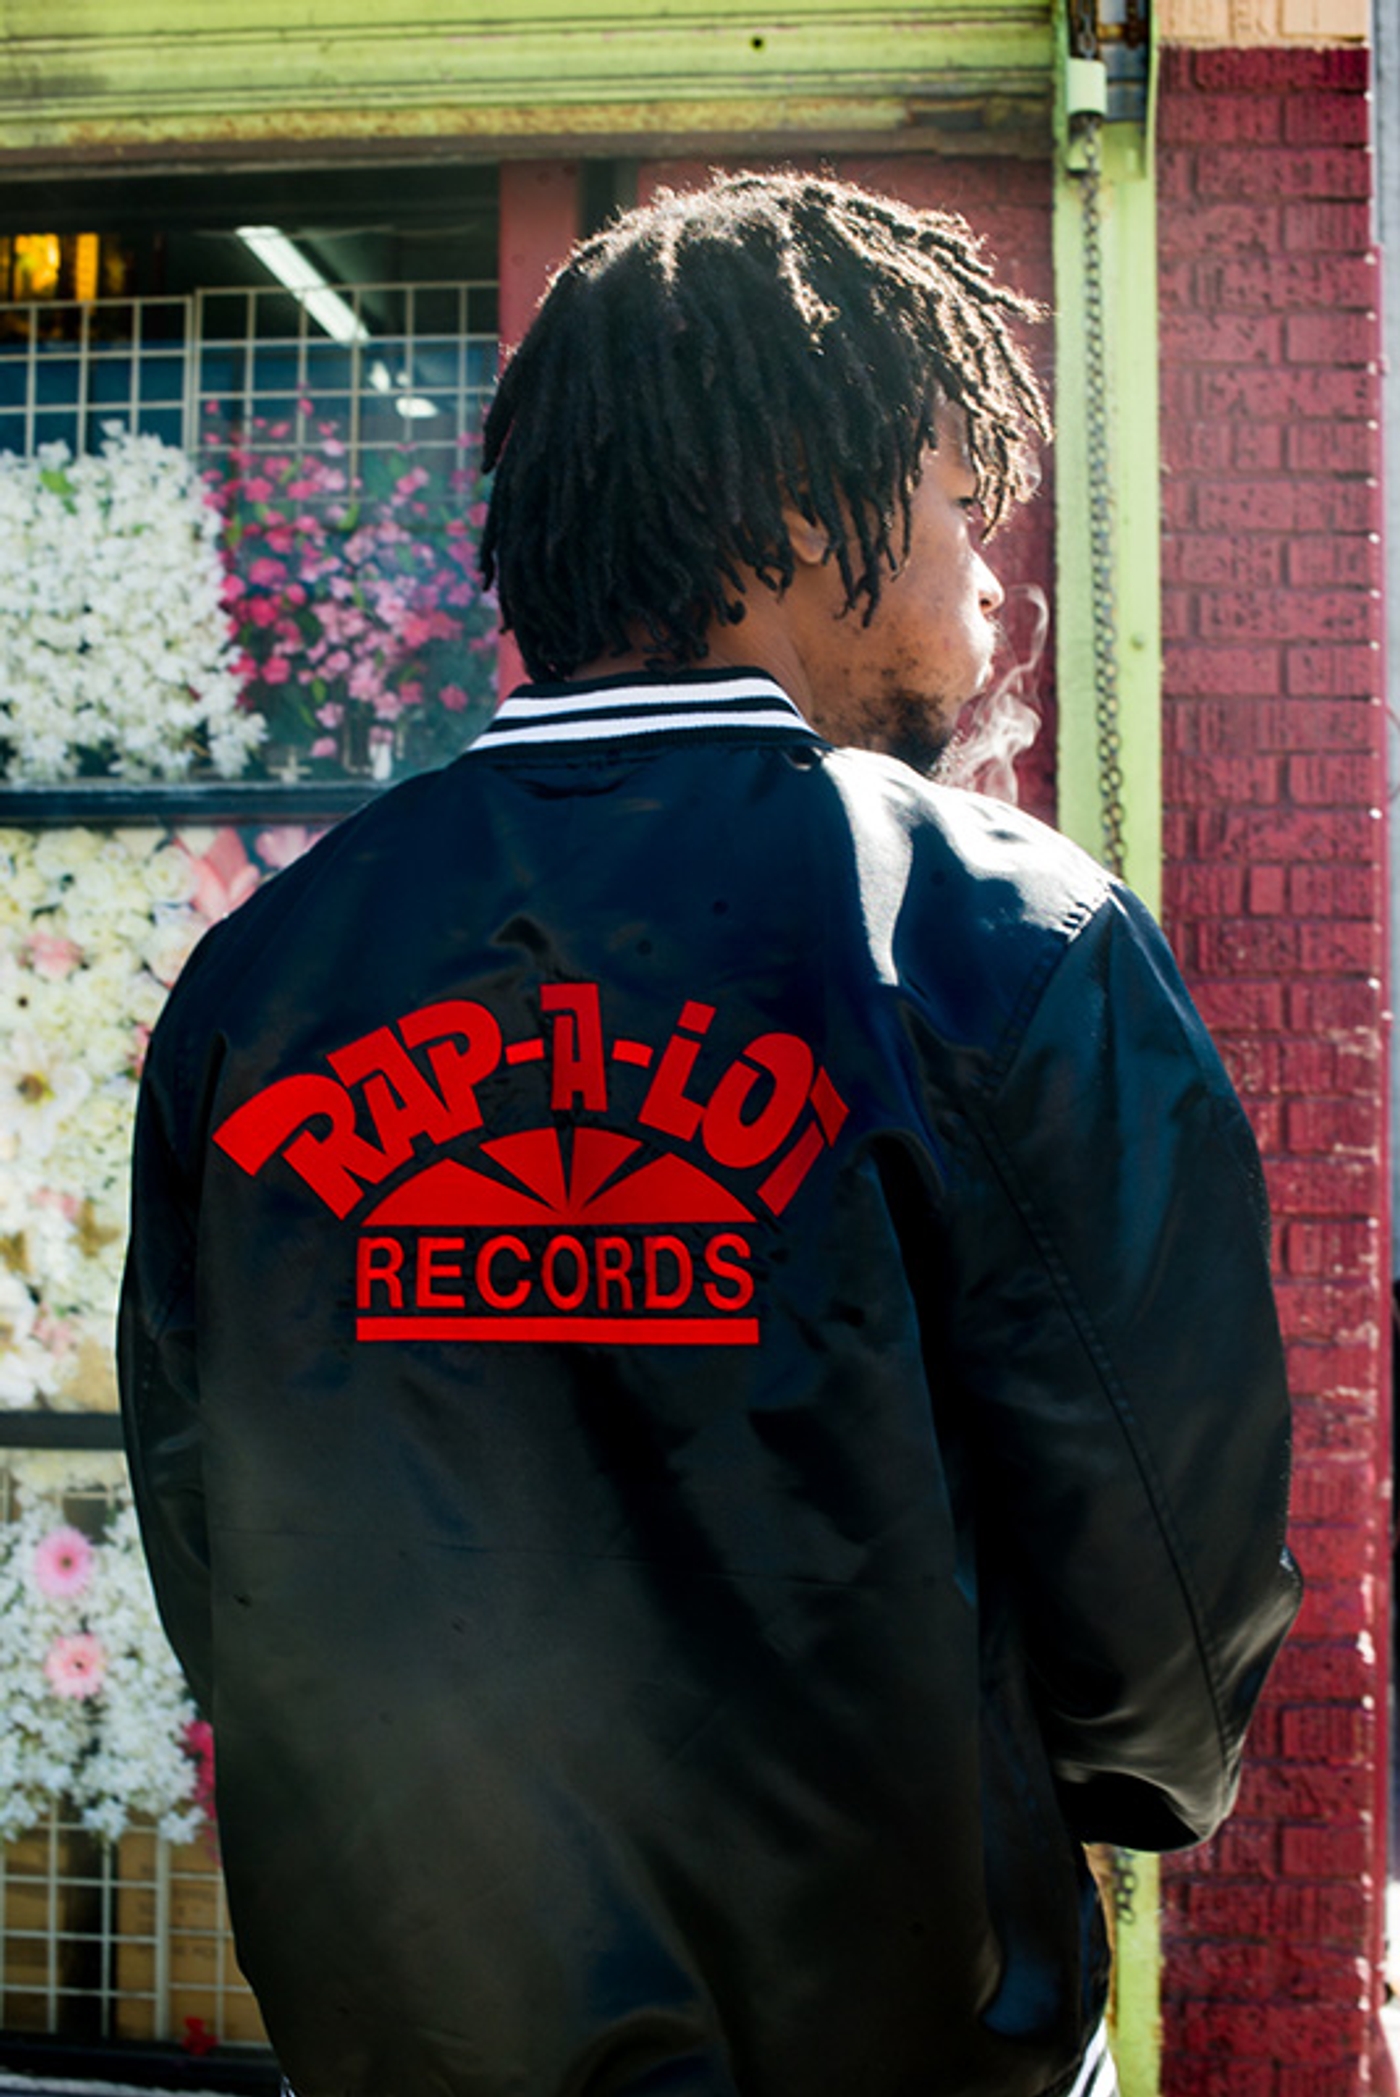 Supreme®/Rap-A-Lot Records (2) (2/15)